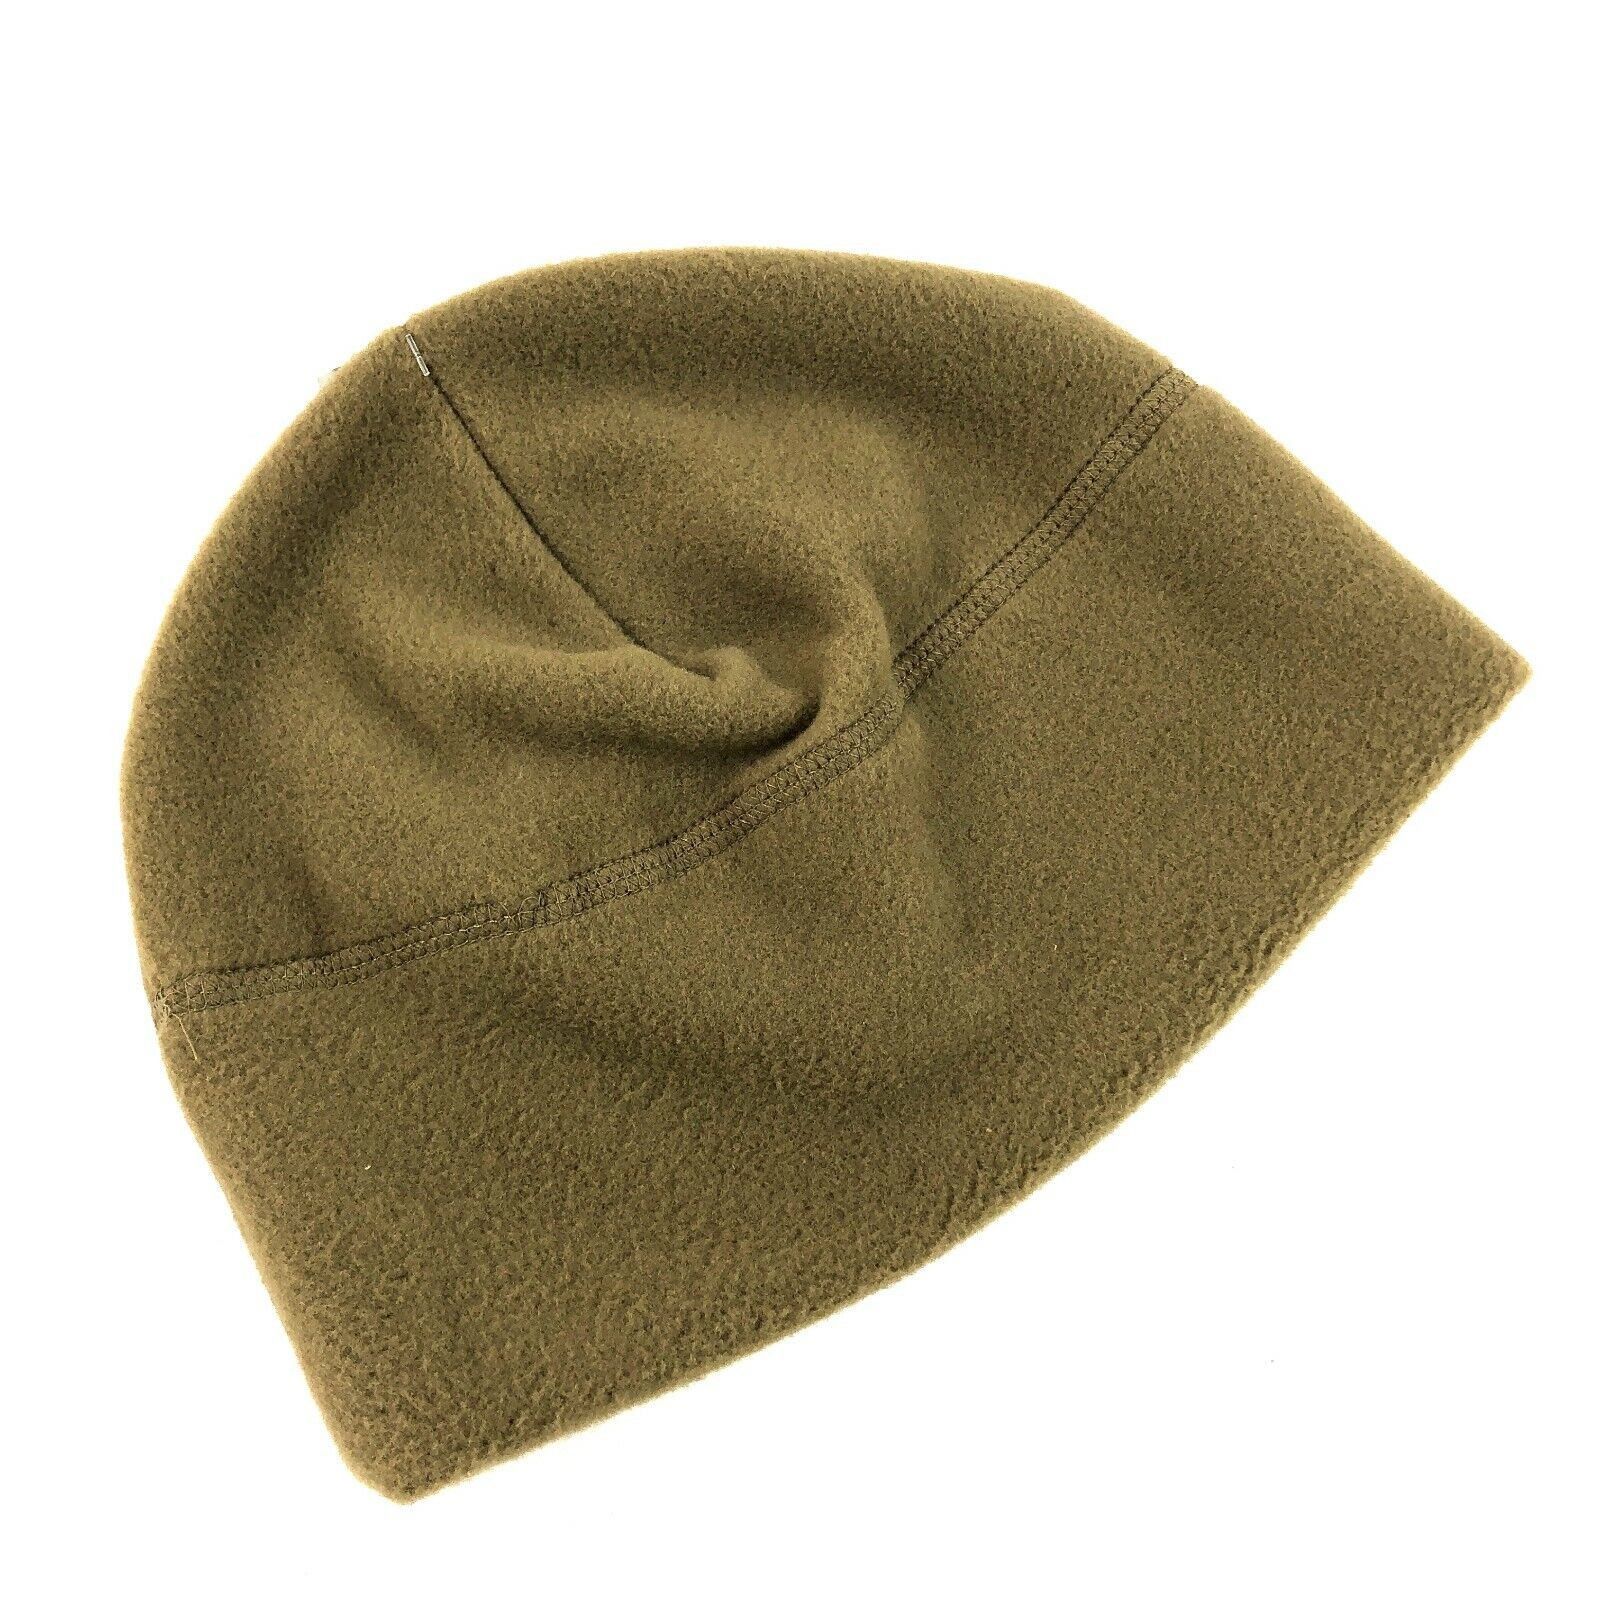 Polartec Micro Fleece Cap Coyote Brown Lightweight Classic Military Winter Hat